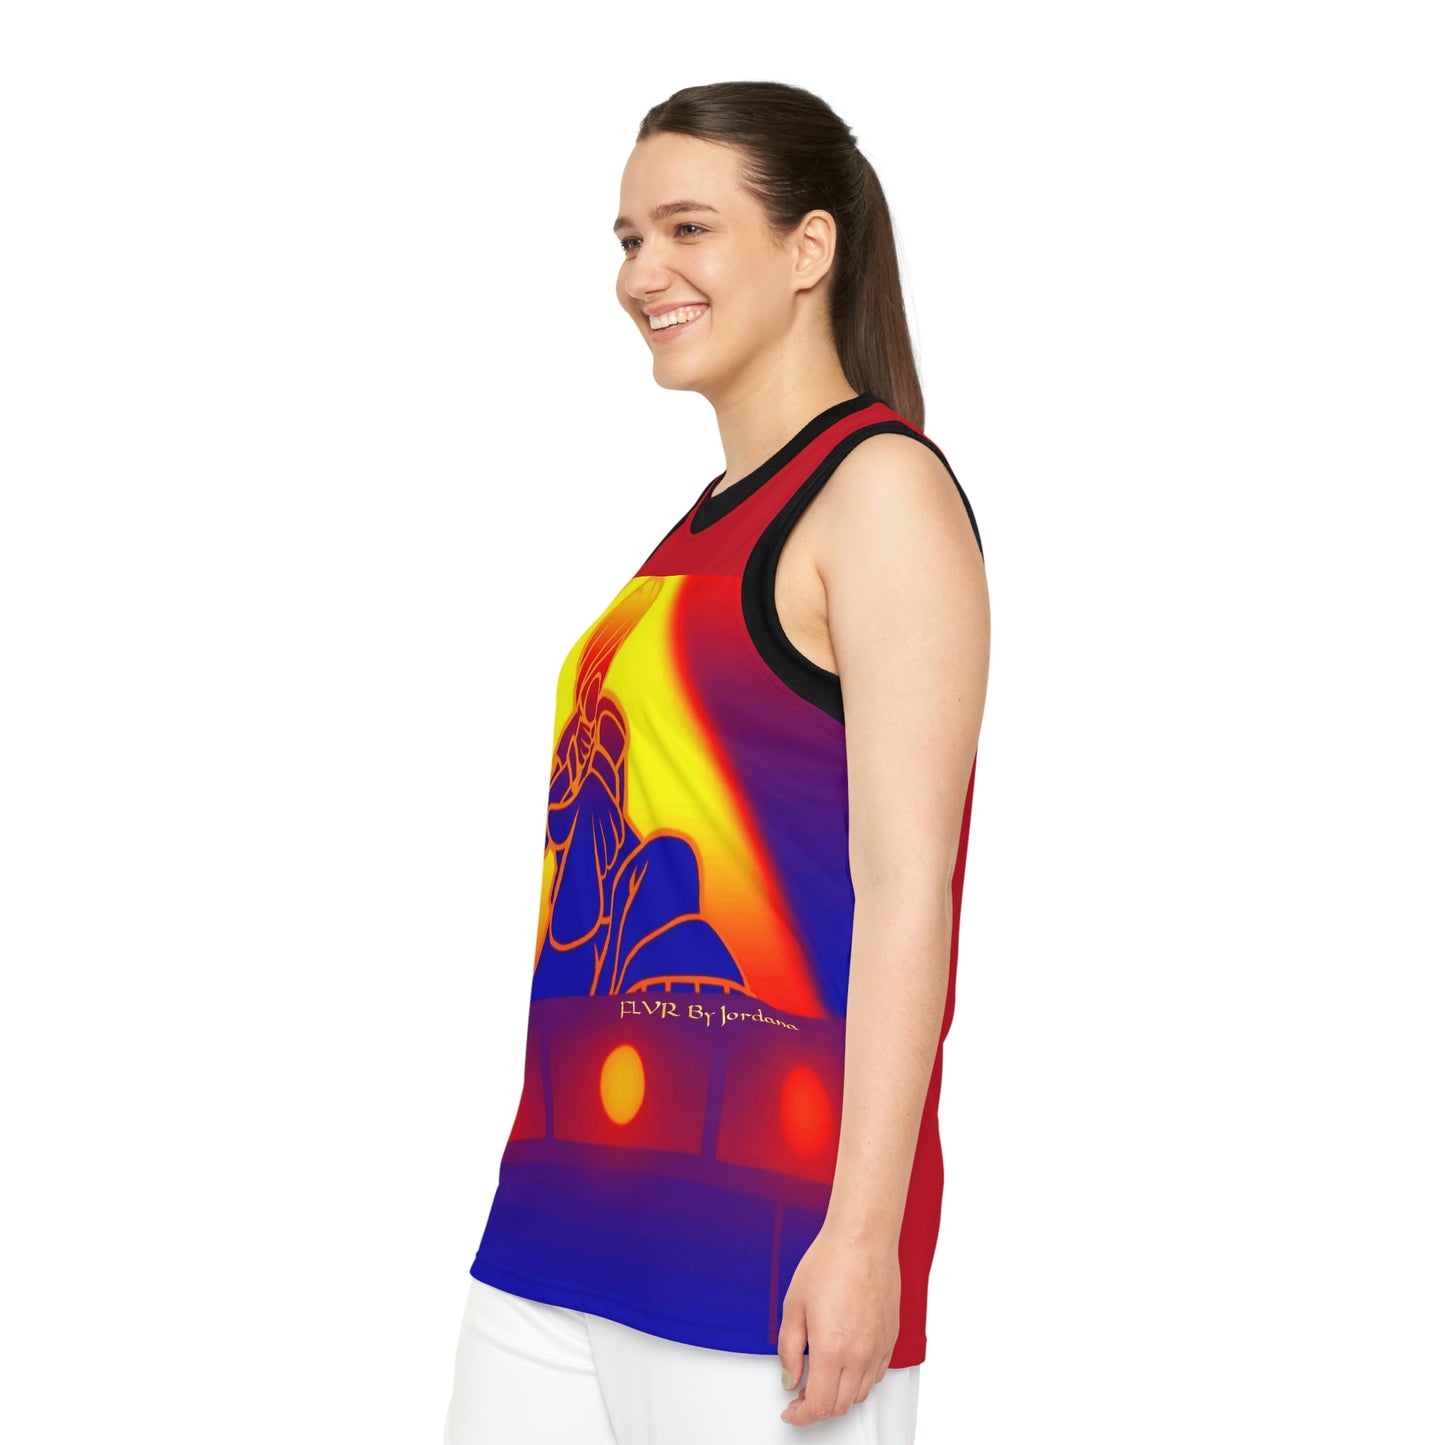 The Heather B Unisex Basketball Jersey